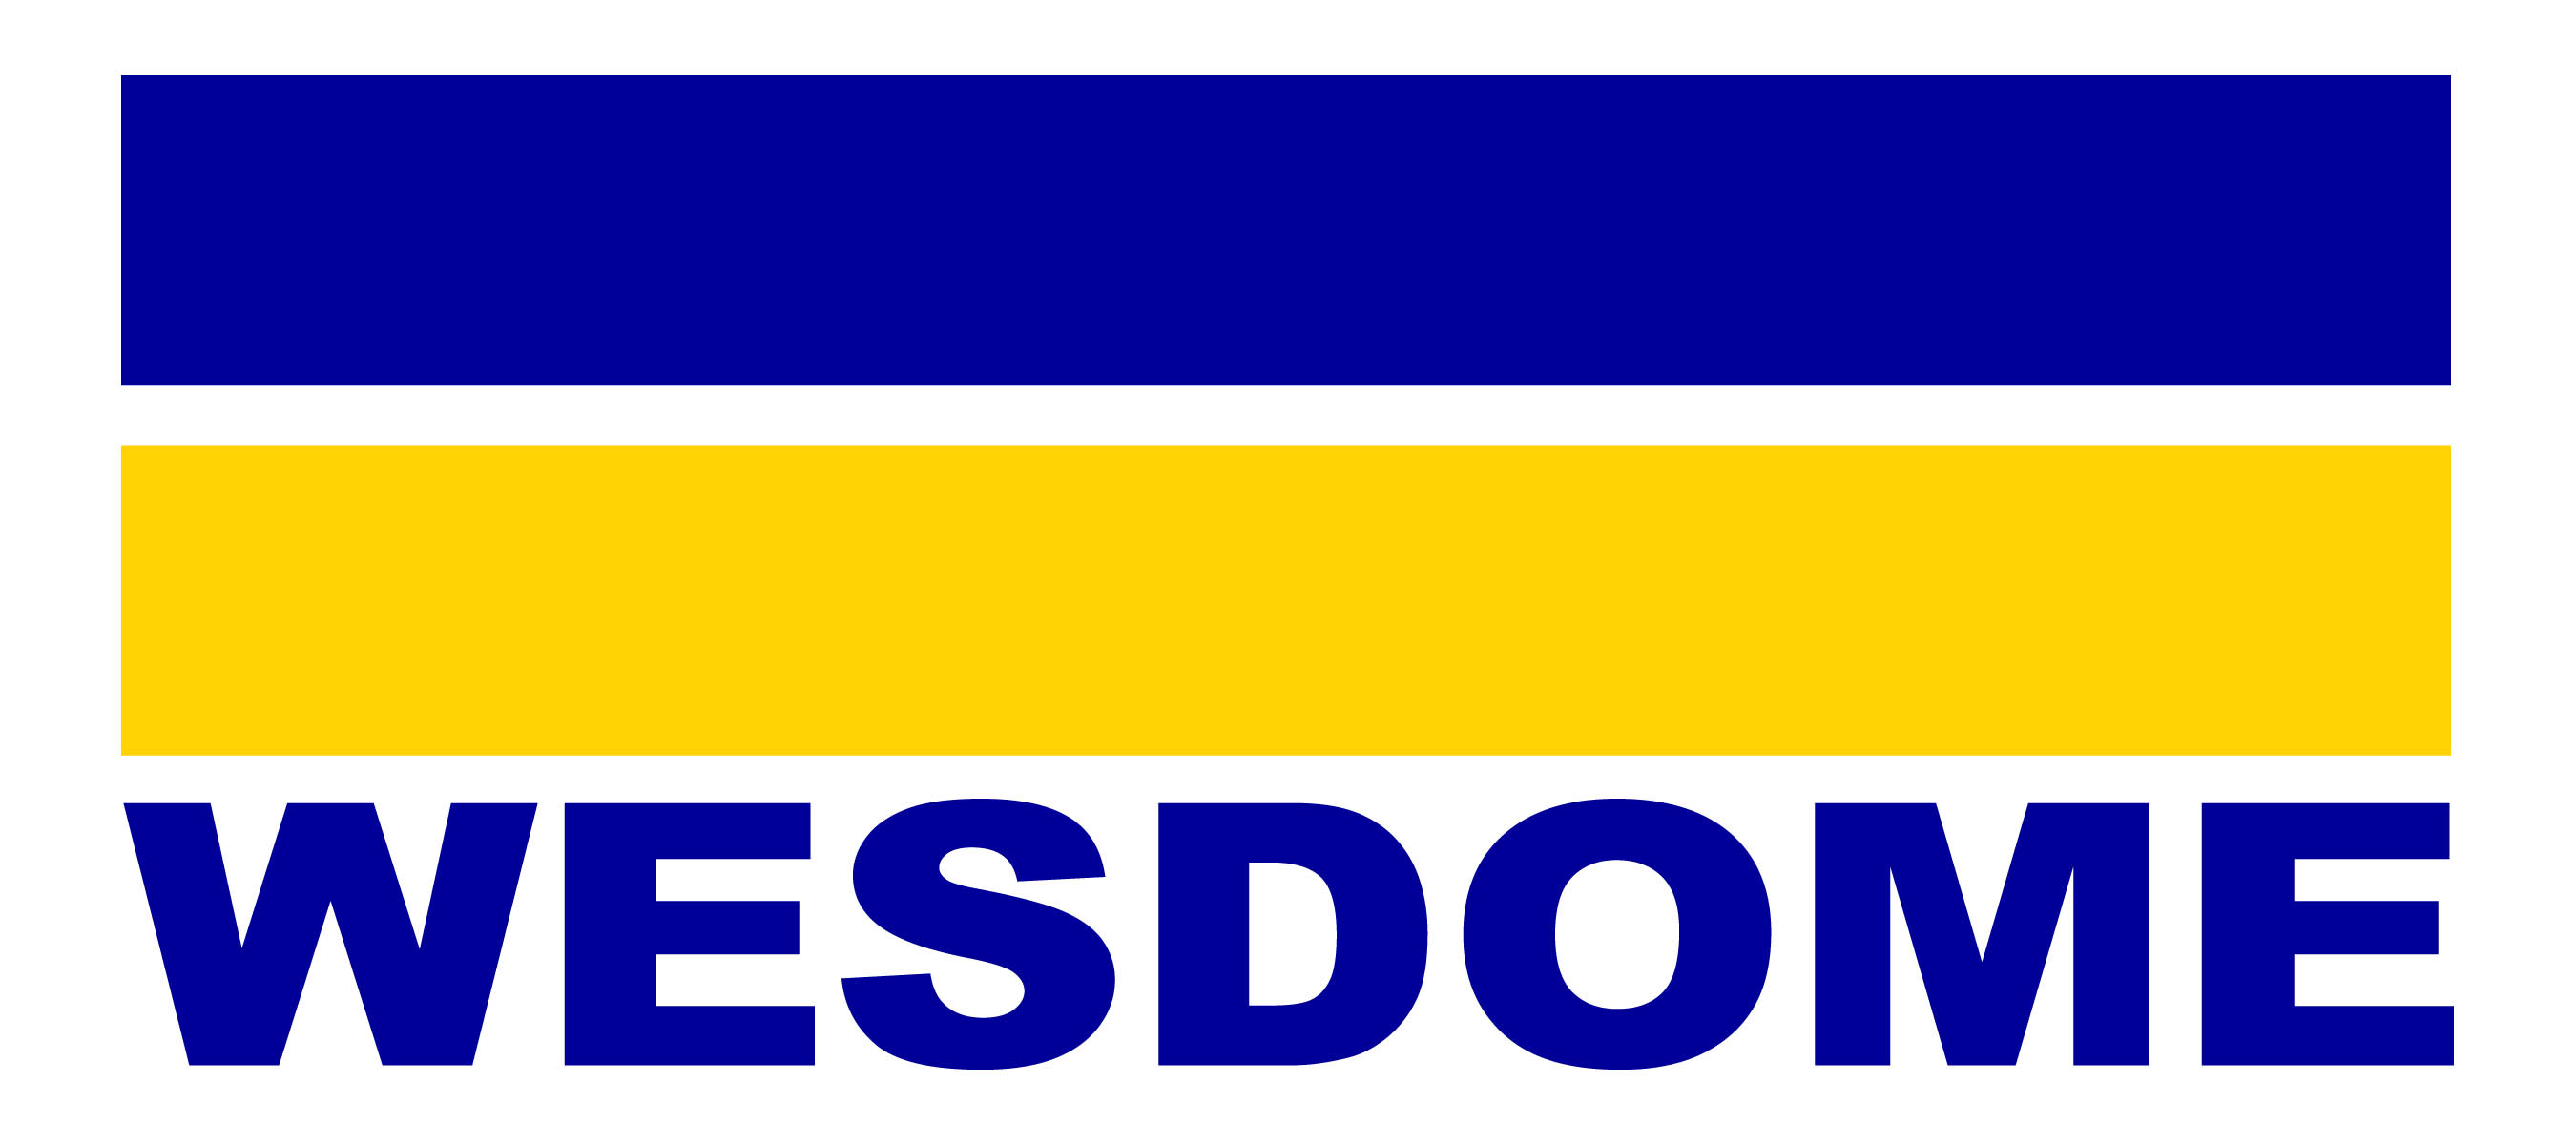 Wesdome logo